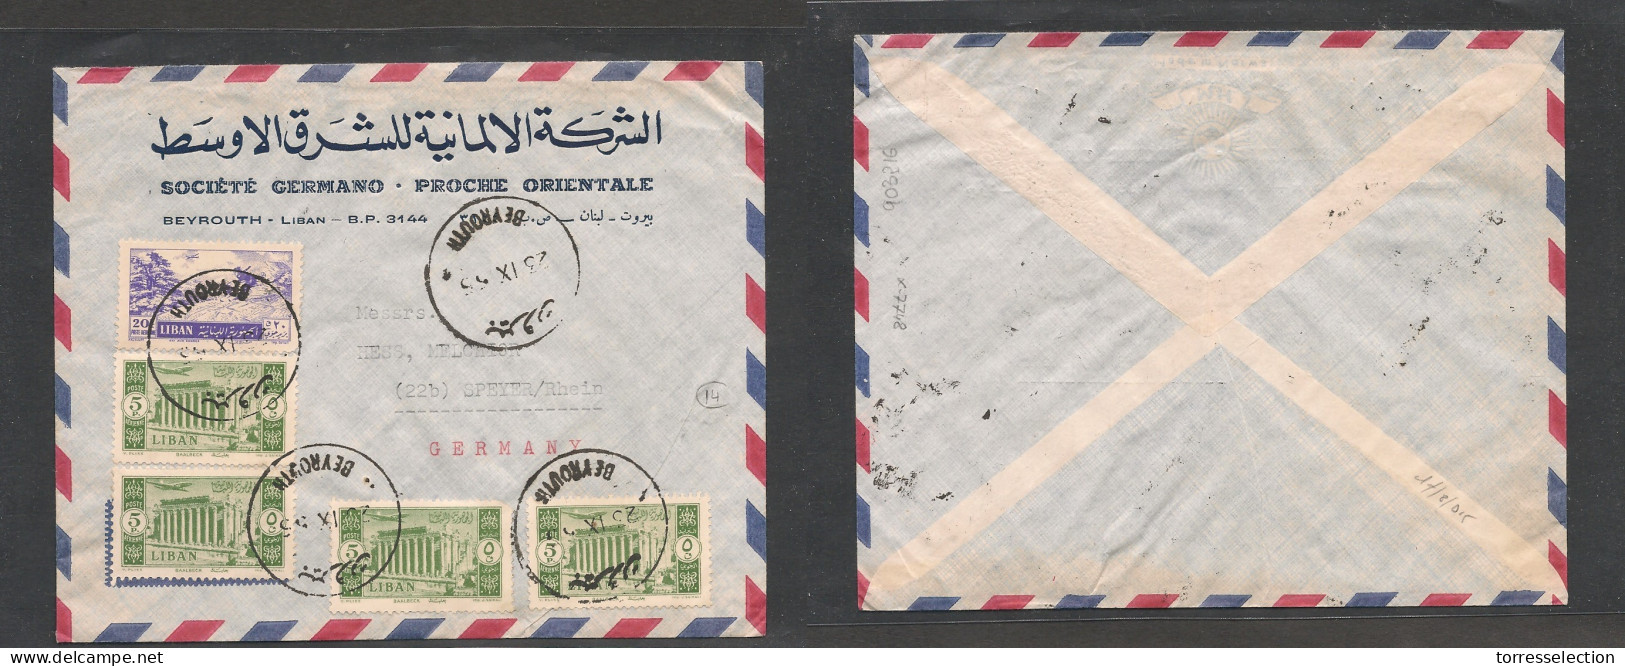 LEBANON. Lebanon Cover - 1955 Beyrouth To Germany Speyer Rhein Air Mult Fkd Env, XF XSALE. - Liban